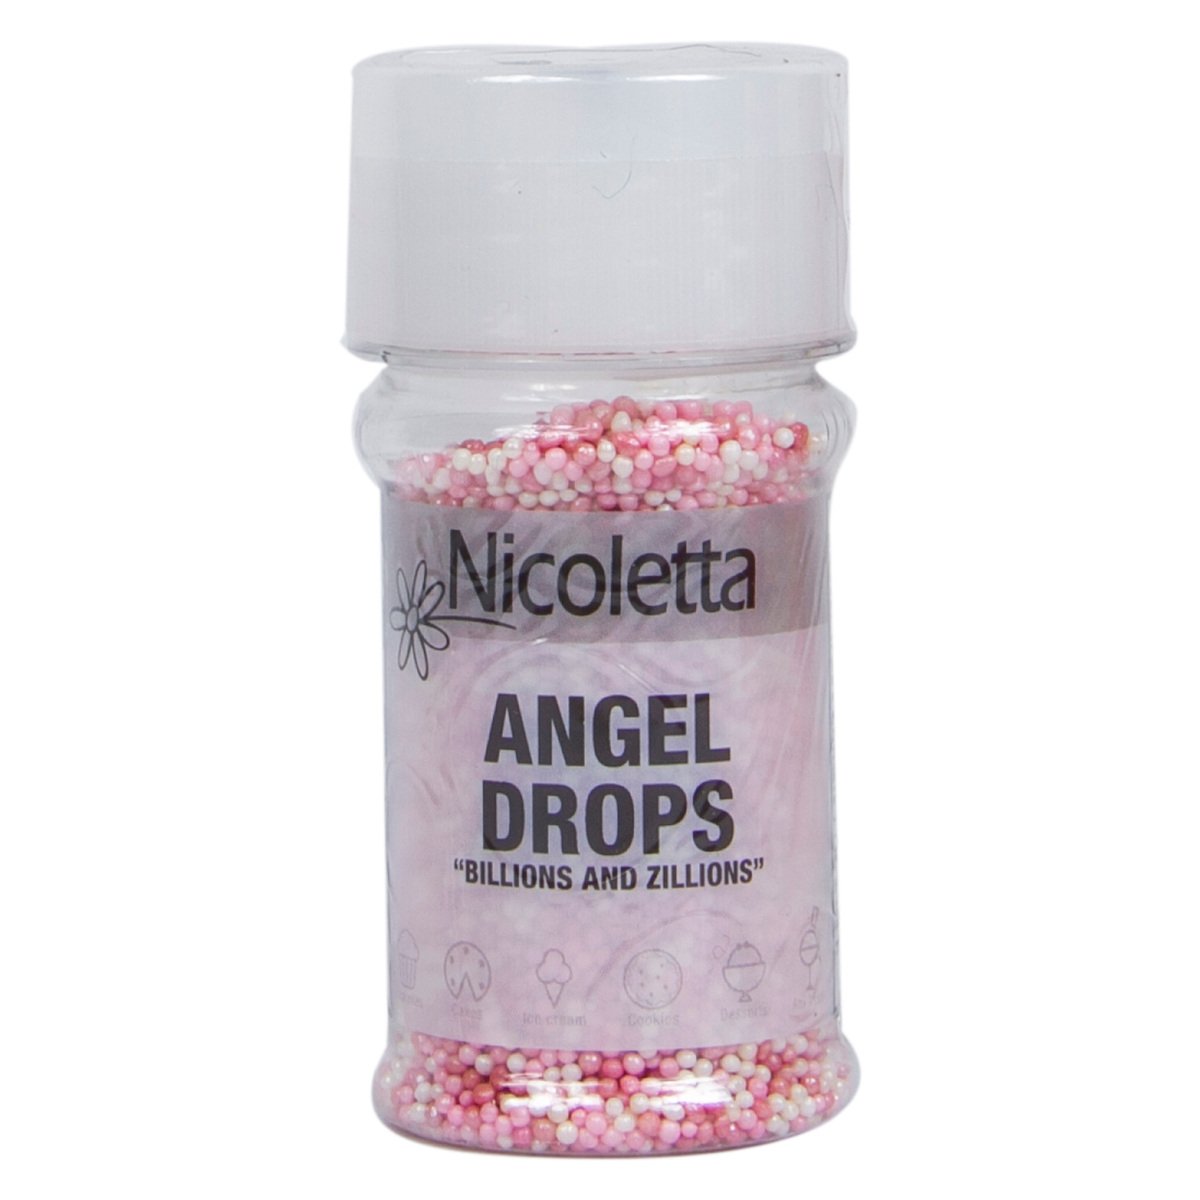 Nicoletta Angel Drops 50 g